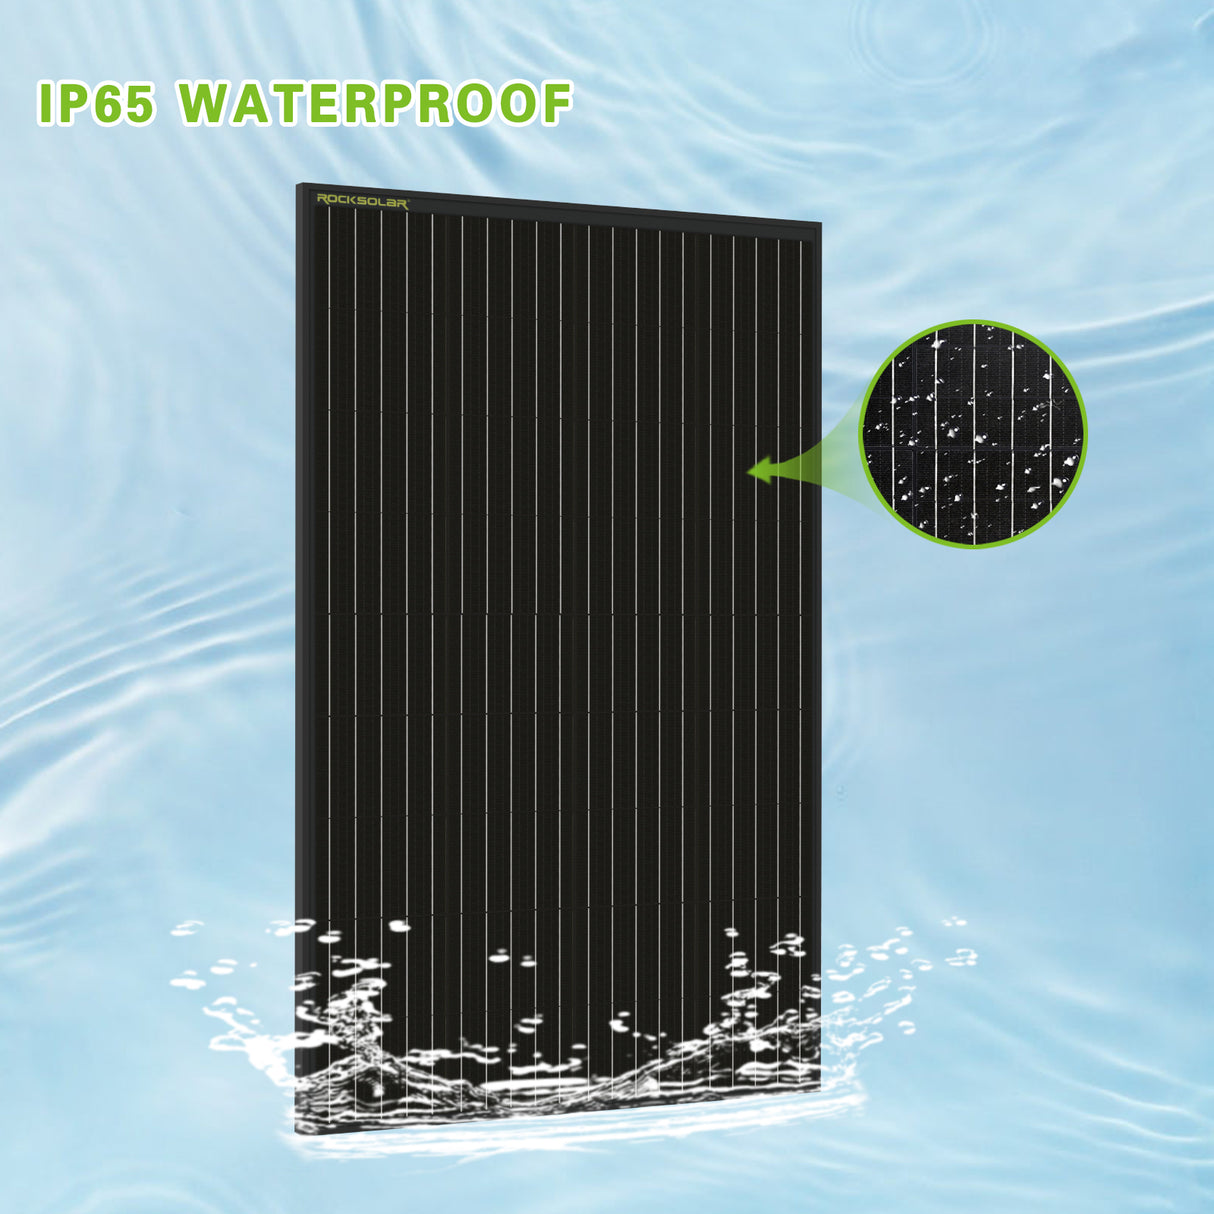 ROCKSOLAR 600W 4Pcs 12V Rigid Monocrystalline Solar Panel - Waterproof with Corrosion-Resistant Aluminum Alloy Frame